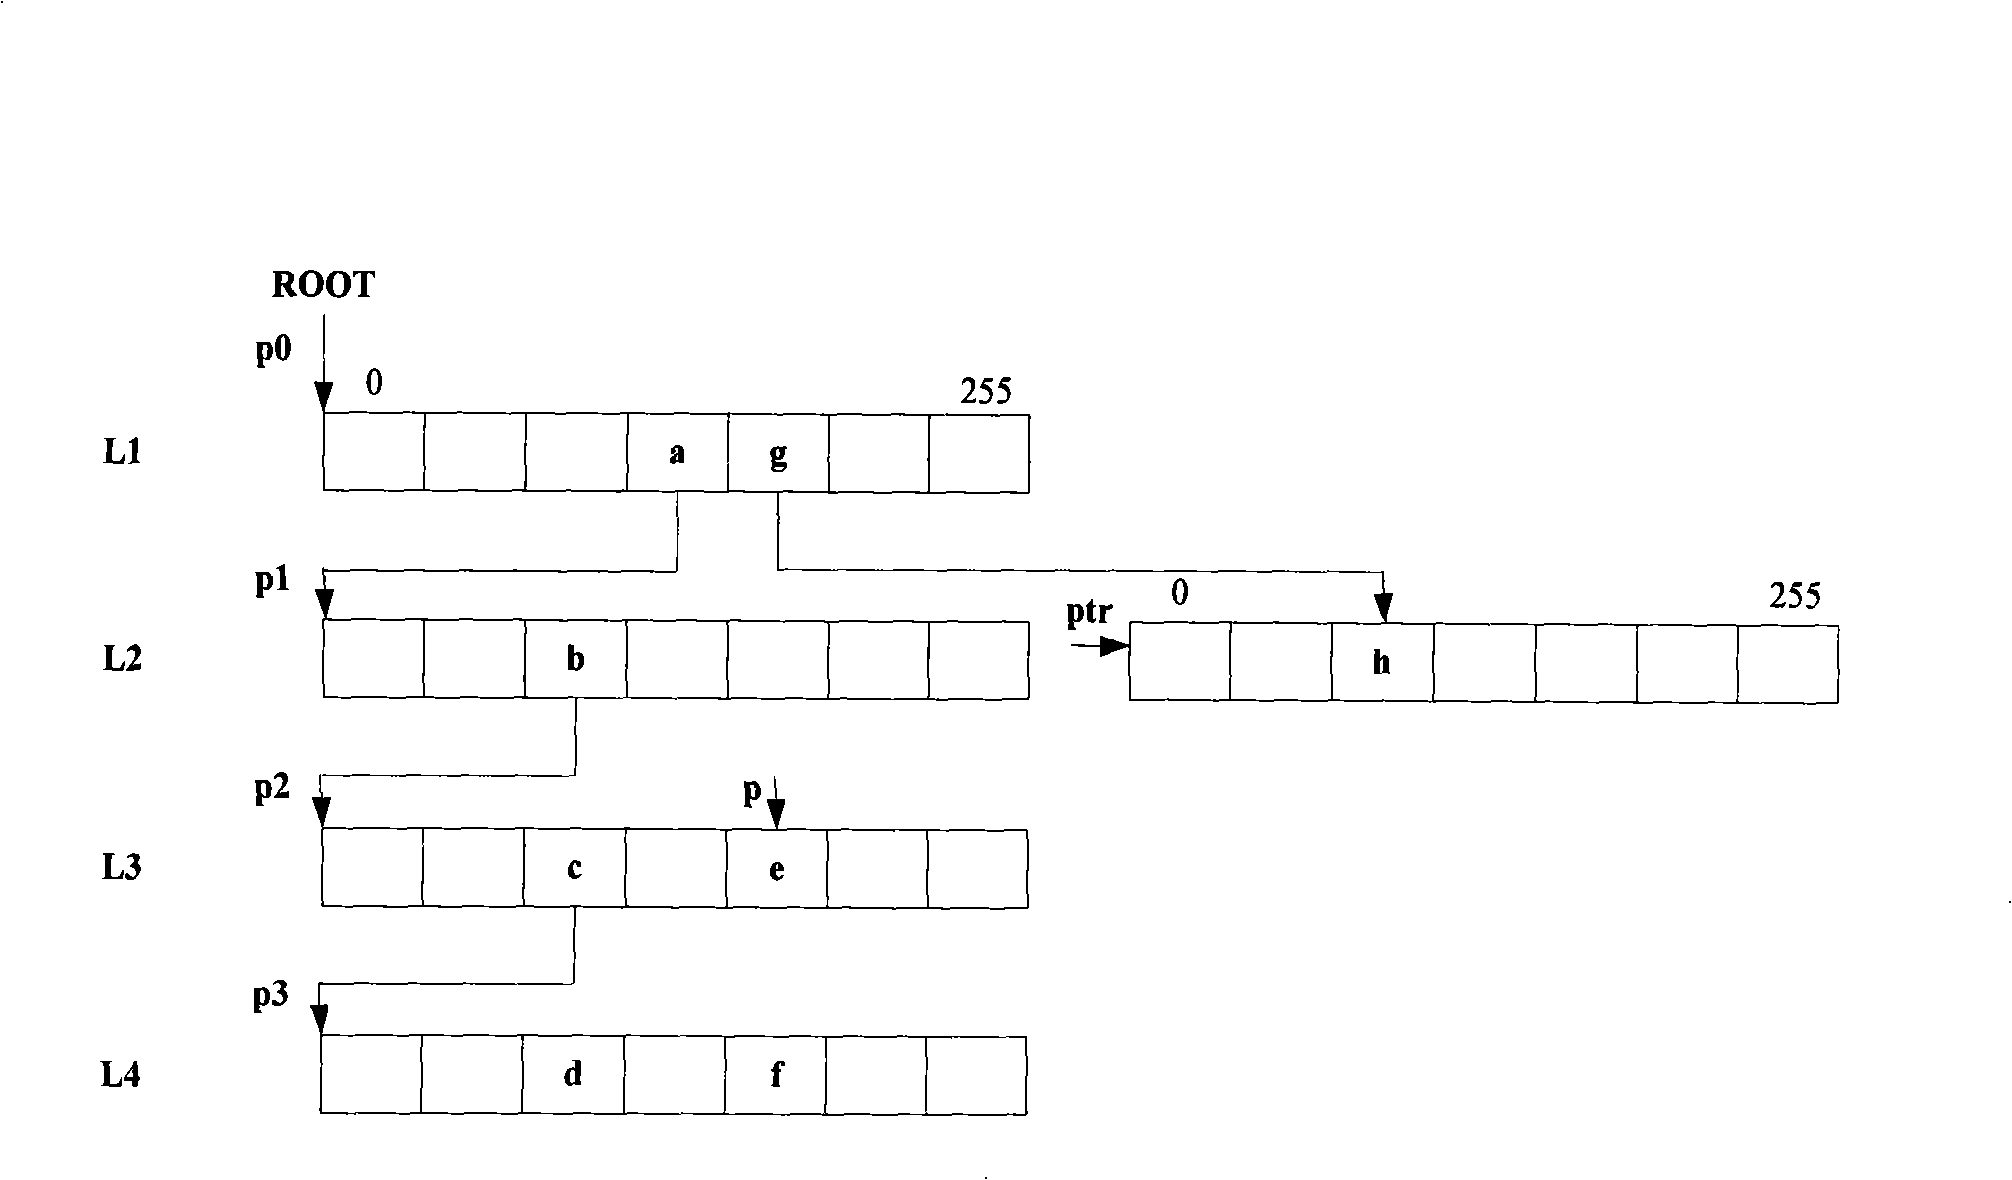 Method for traversing multi-branch Trie tree